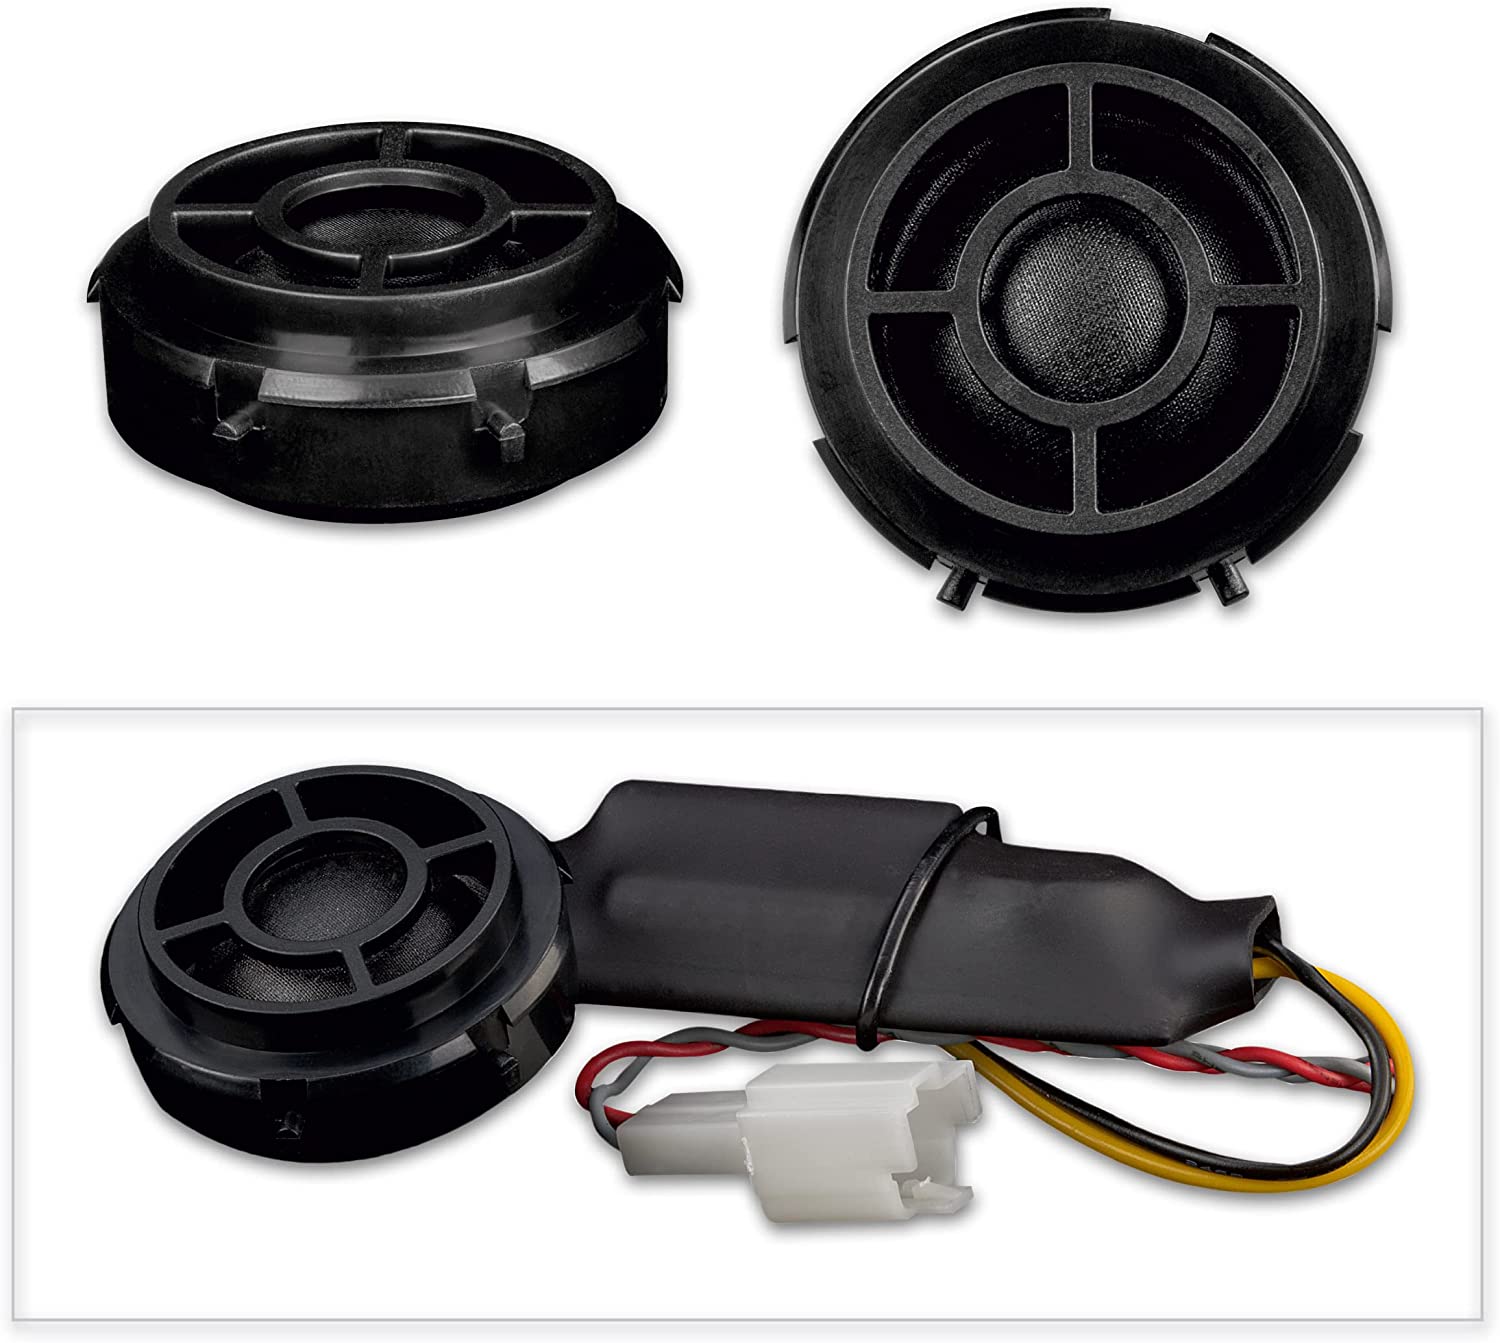 EMPHASER EM-FDF1 Plug & Play 2-Wege Kompo Lautsprecher System kompatibel mit Ford Transit und Transit Custom